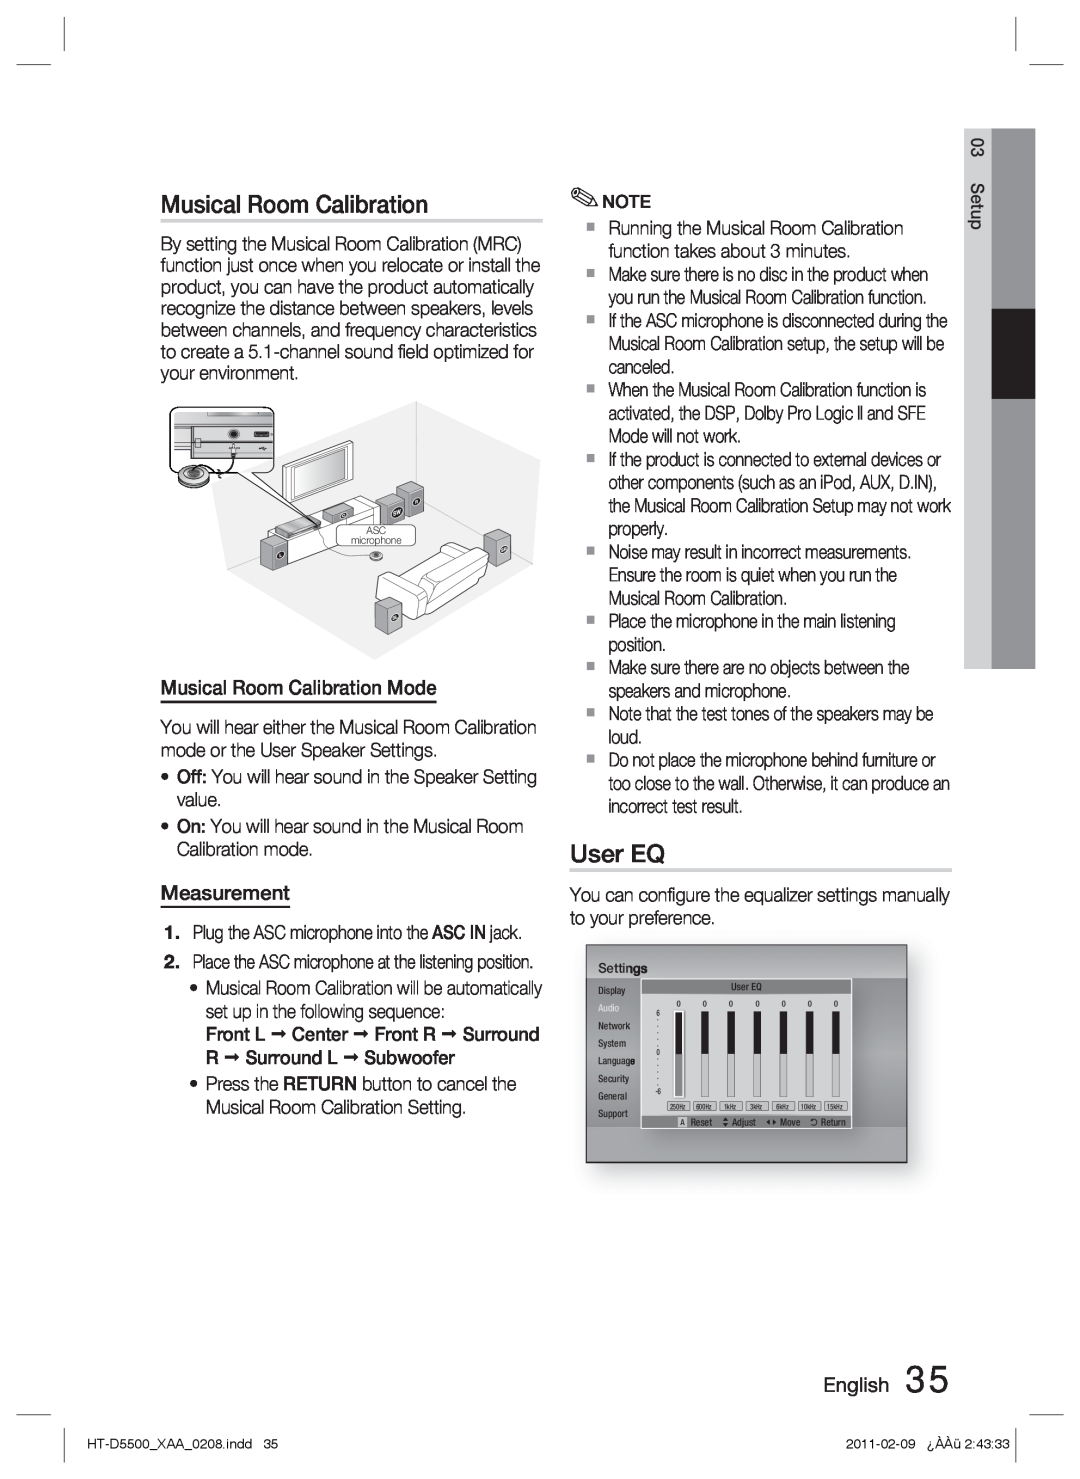 Samsung D5500 user manual User EQ, Musical Room Calibration Mode, Measurement, English 